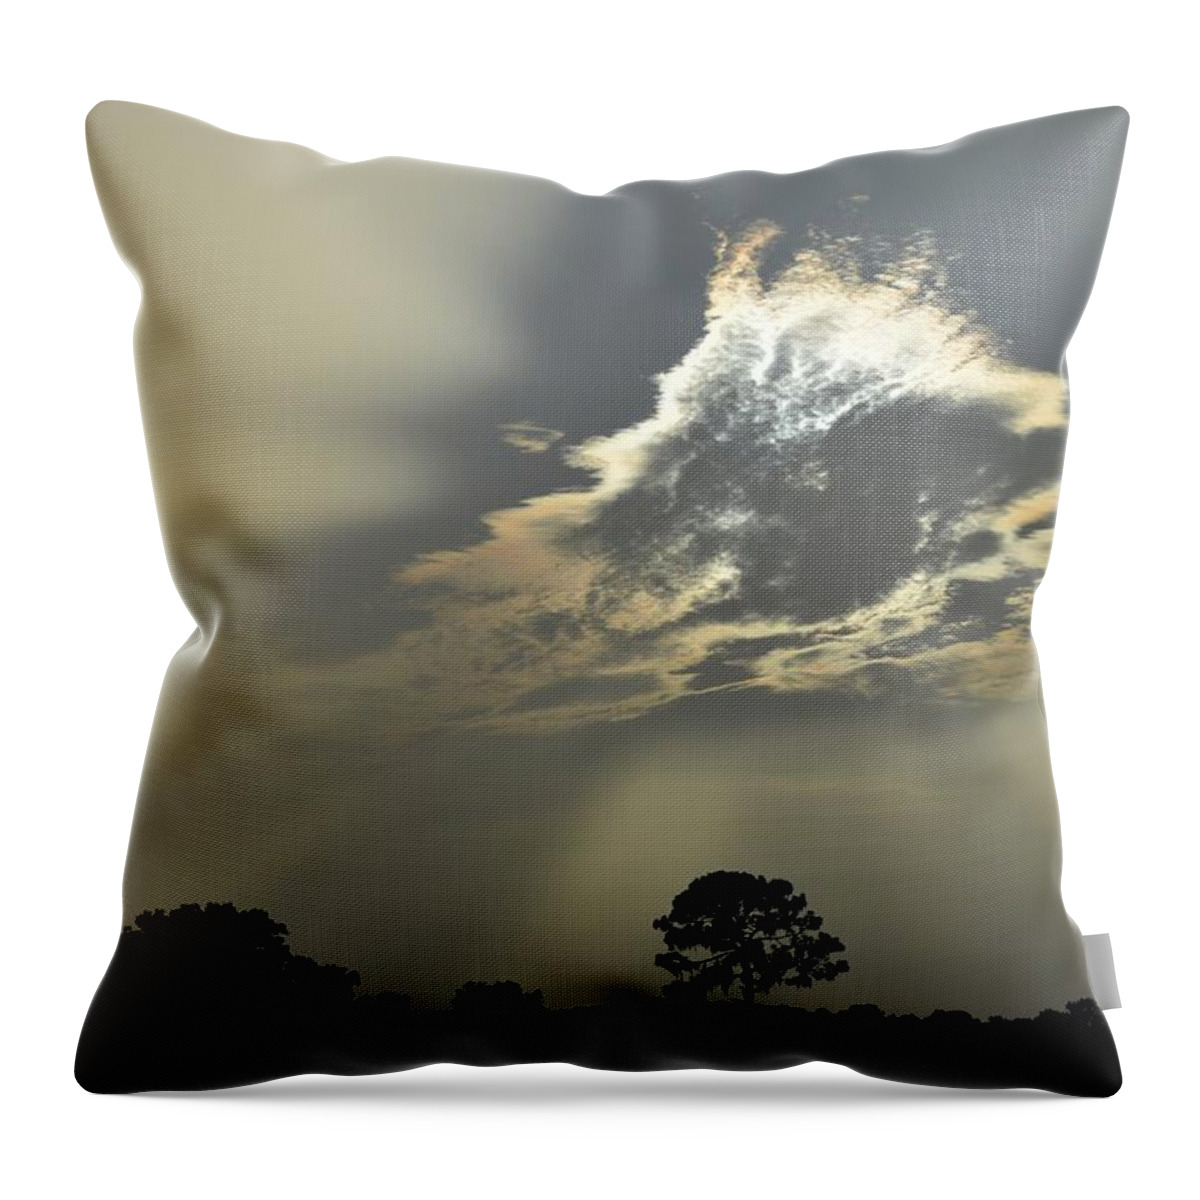 Sunset Cloud Throw Pillow featuring the photograph Sunset Cloud #1 by Warren Thompson